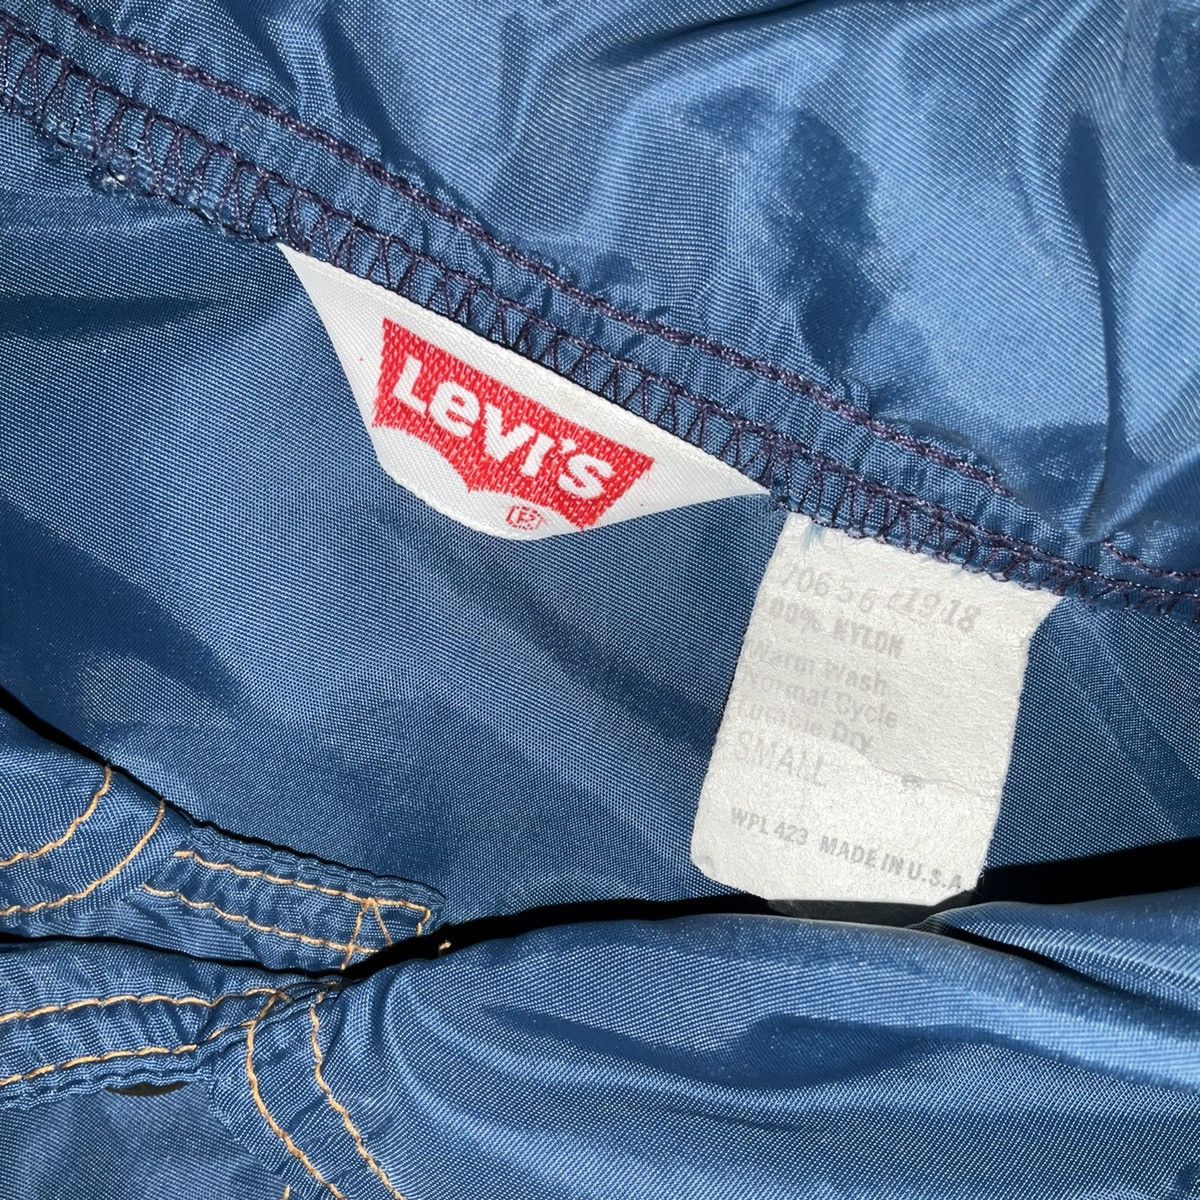 Levi's Levi’s Orange Tab 100% Nylon Trucker Jacket Size US S / EU 44-46 / 1 - 4 Preview